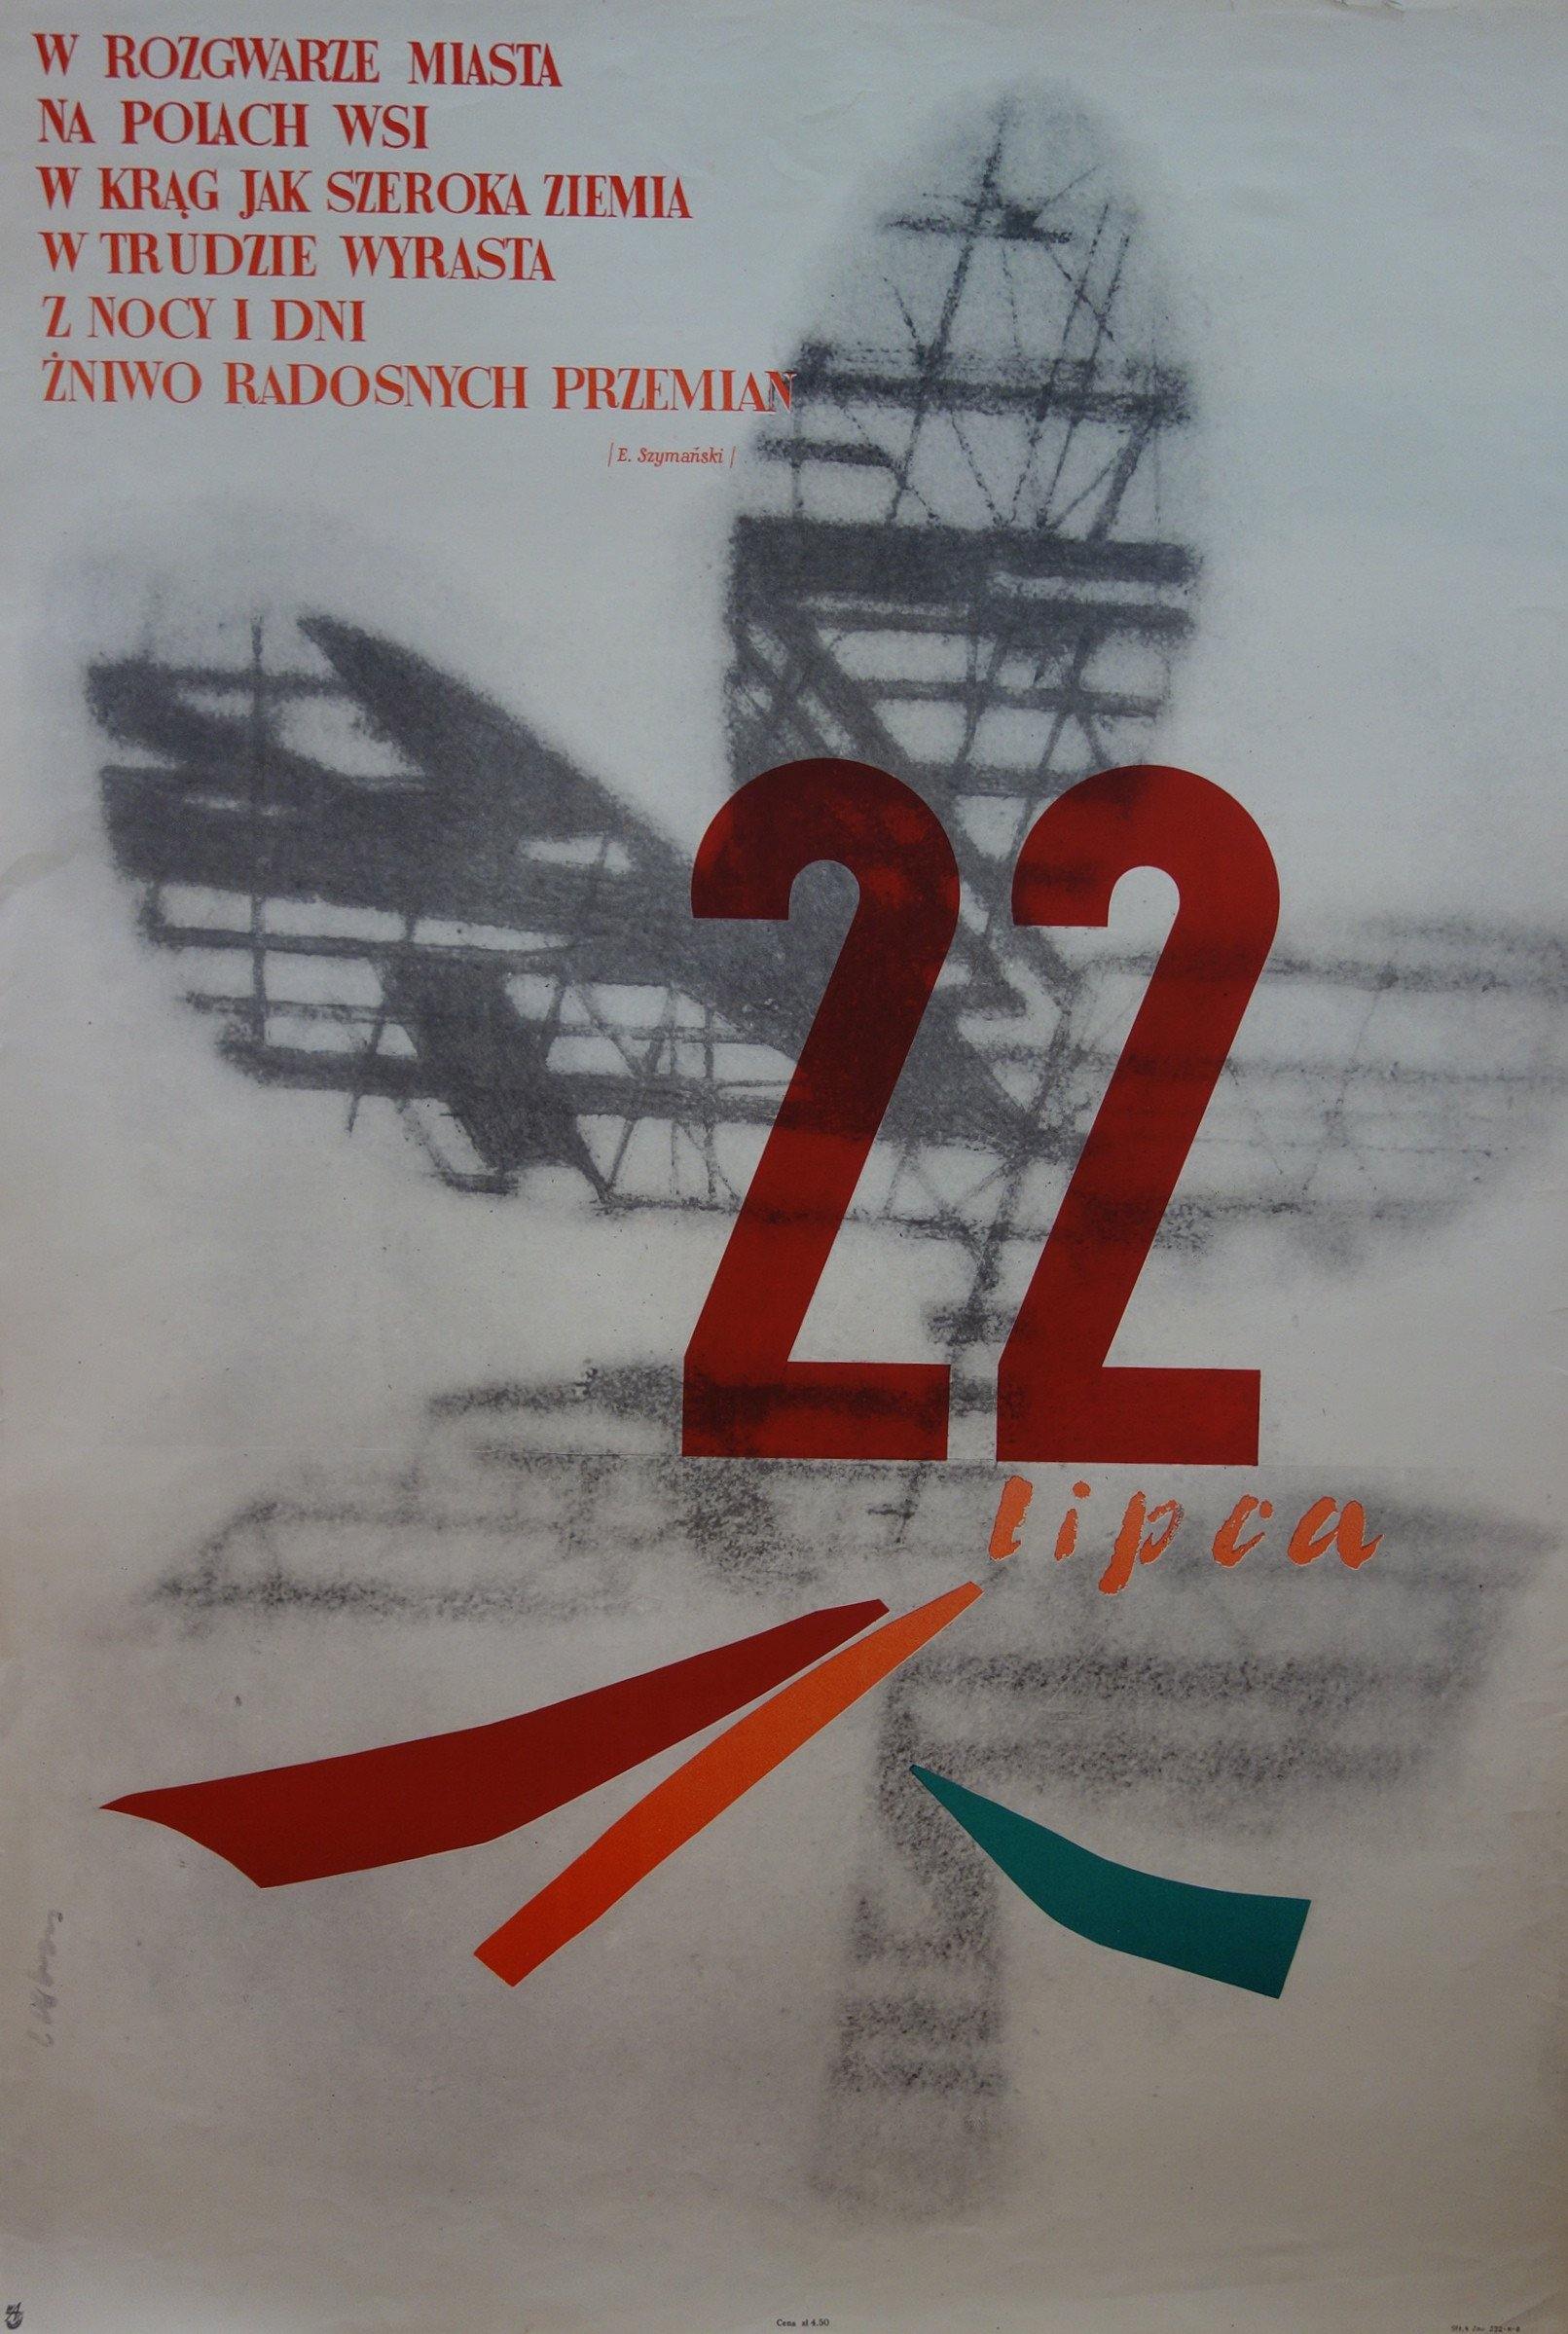 22 Lipca Fade - Poster Museum